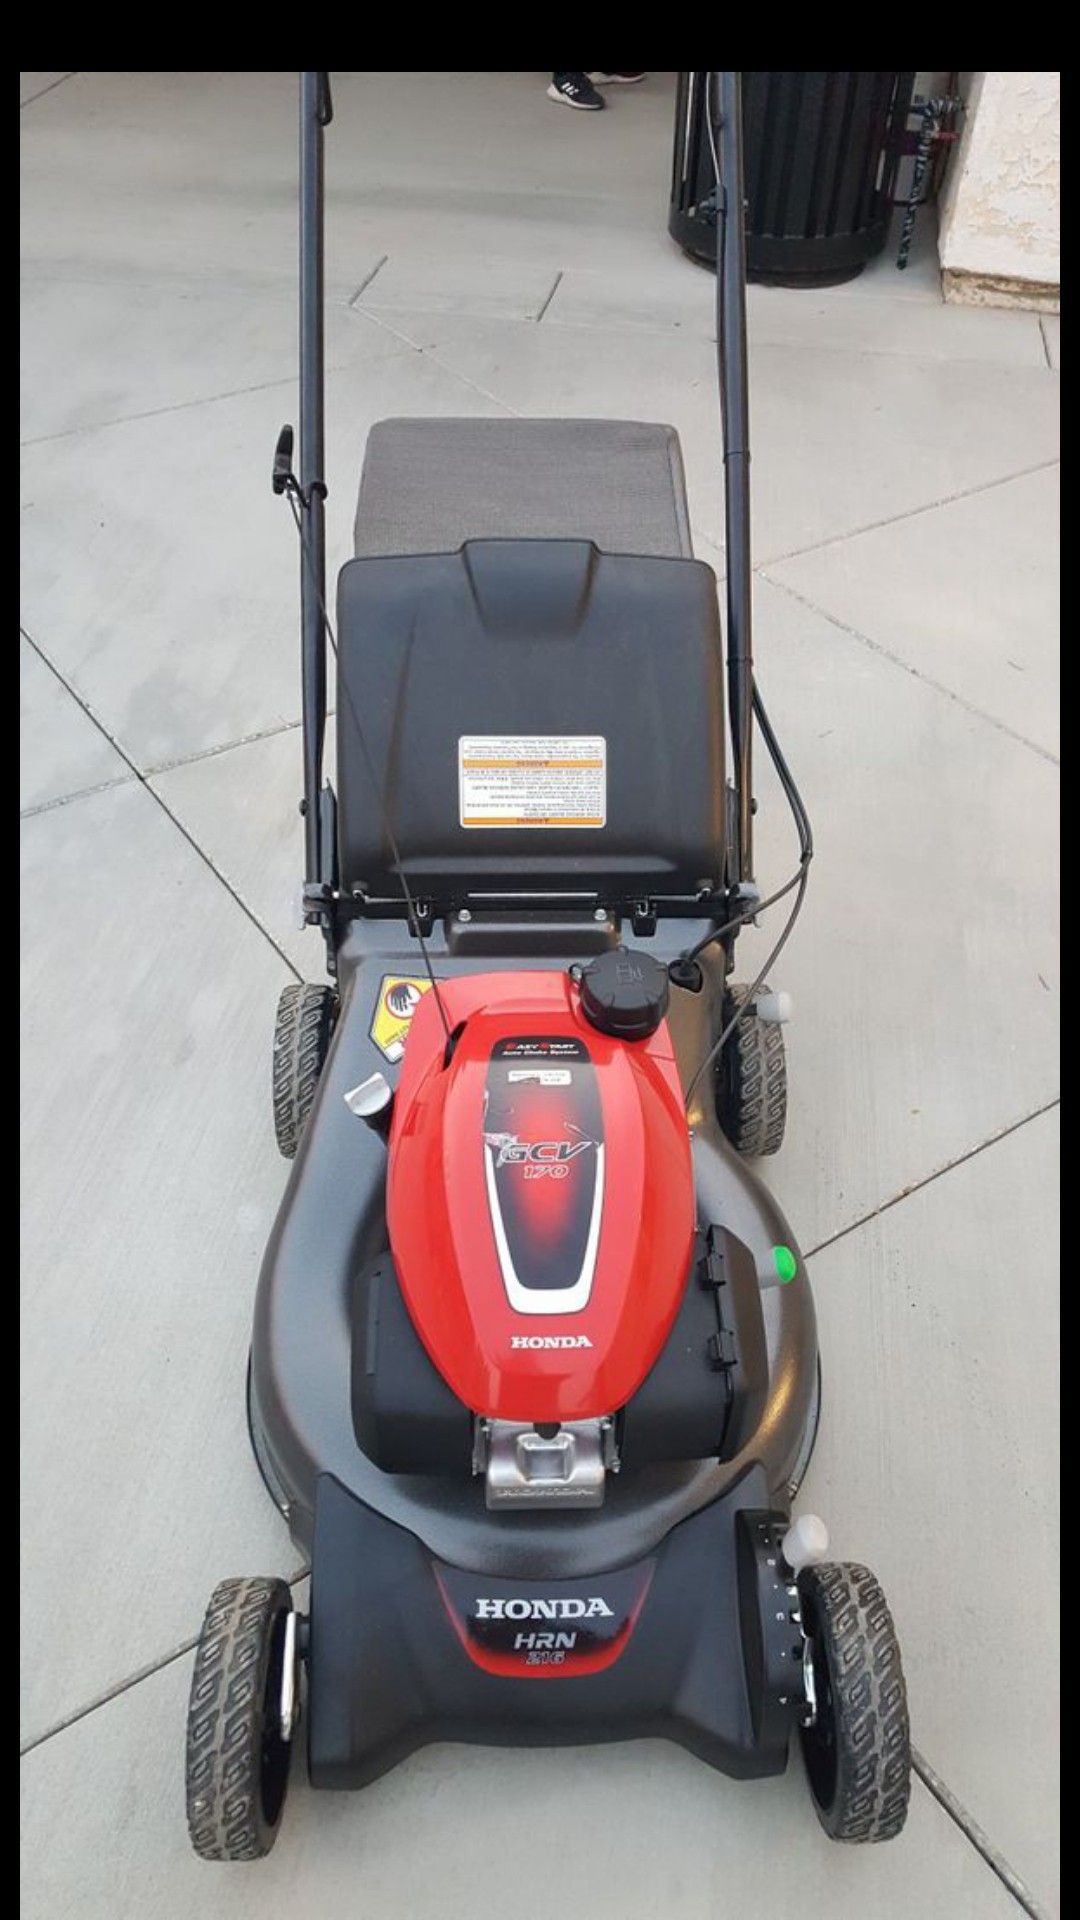 Brand new Honda self-propel lawn mower